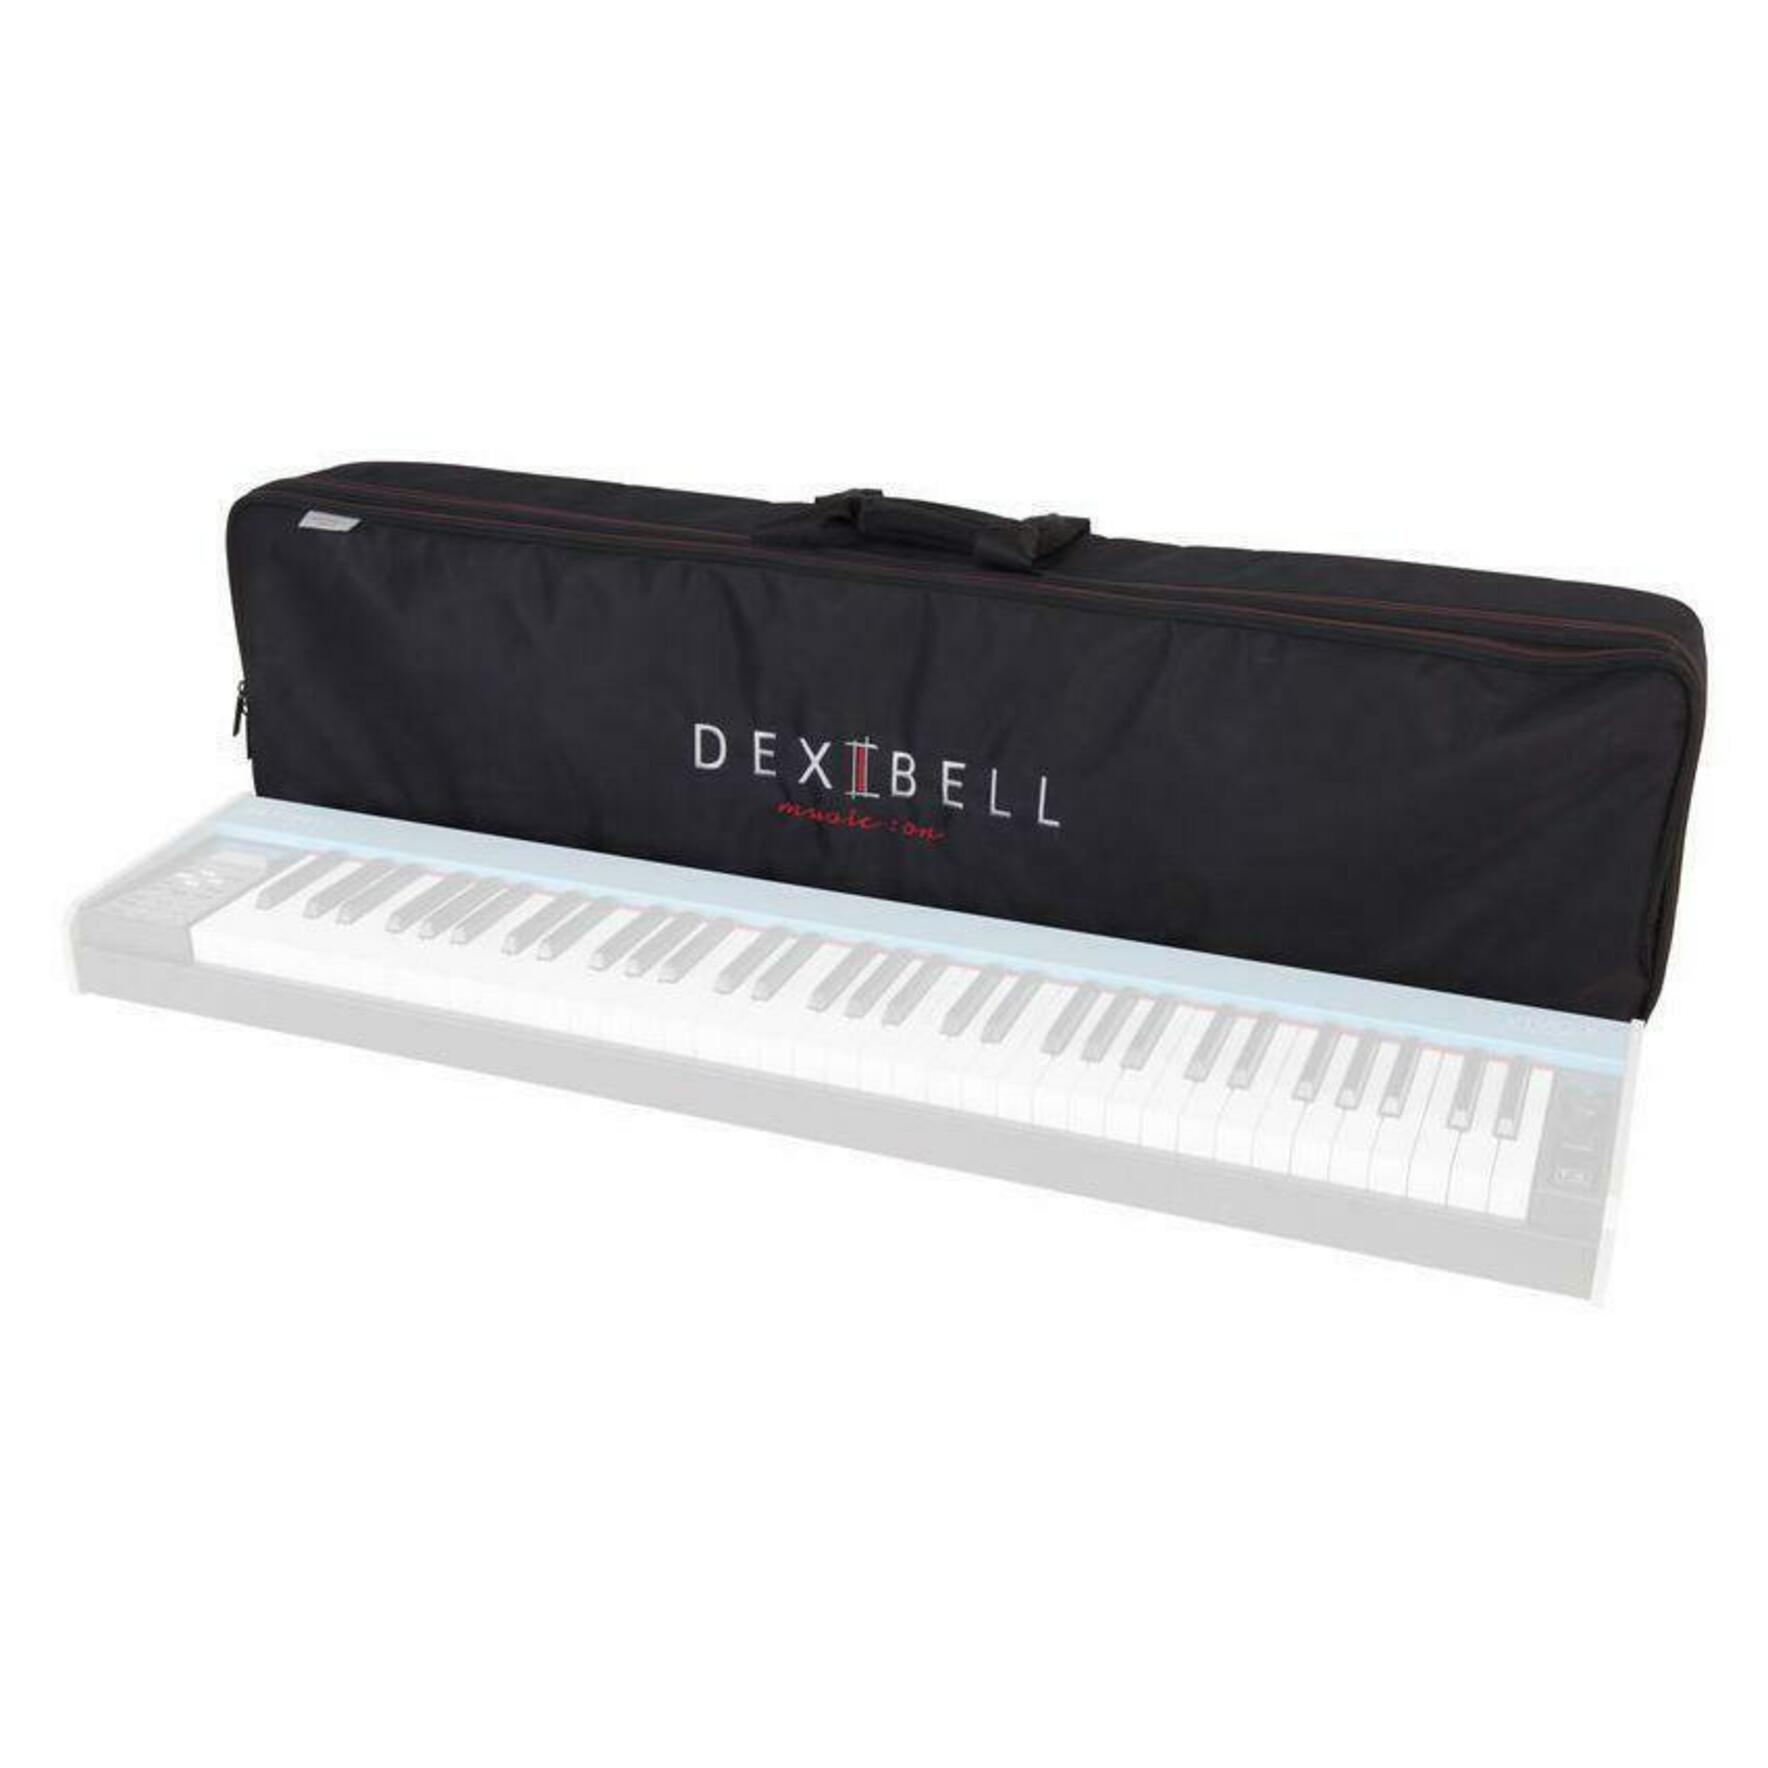 Чехлы и кейсы для клавишных Dexibell Bag S1 (для VIVO S-1) чехлы и кейсы для клавишных dexibell bag s1 для vivo s 1